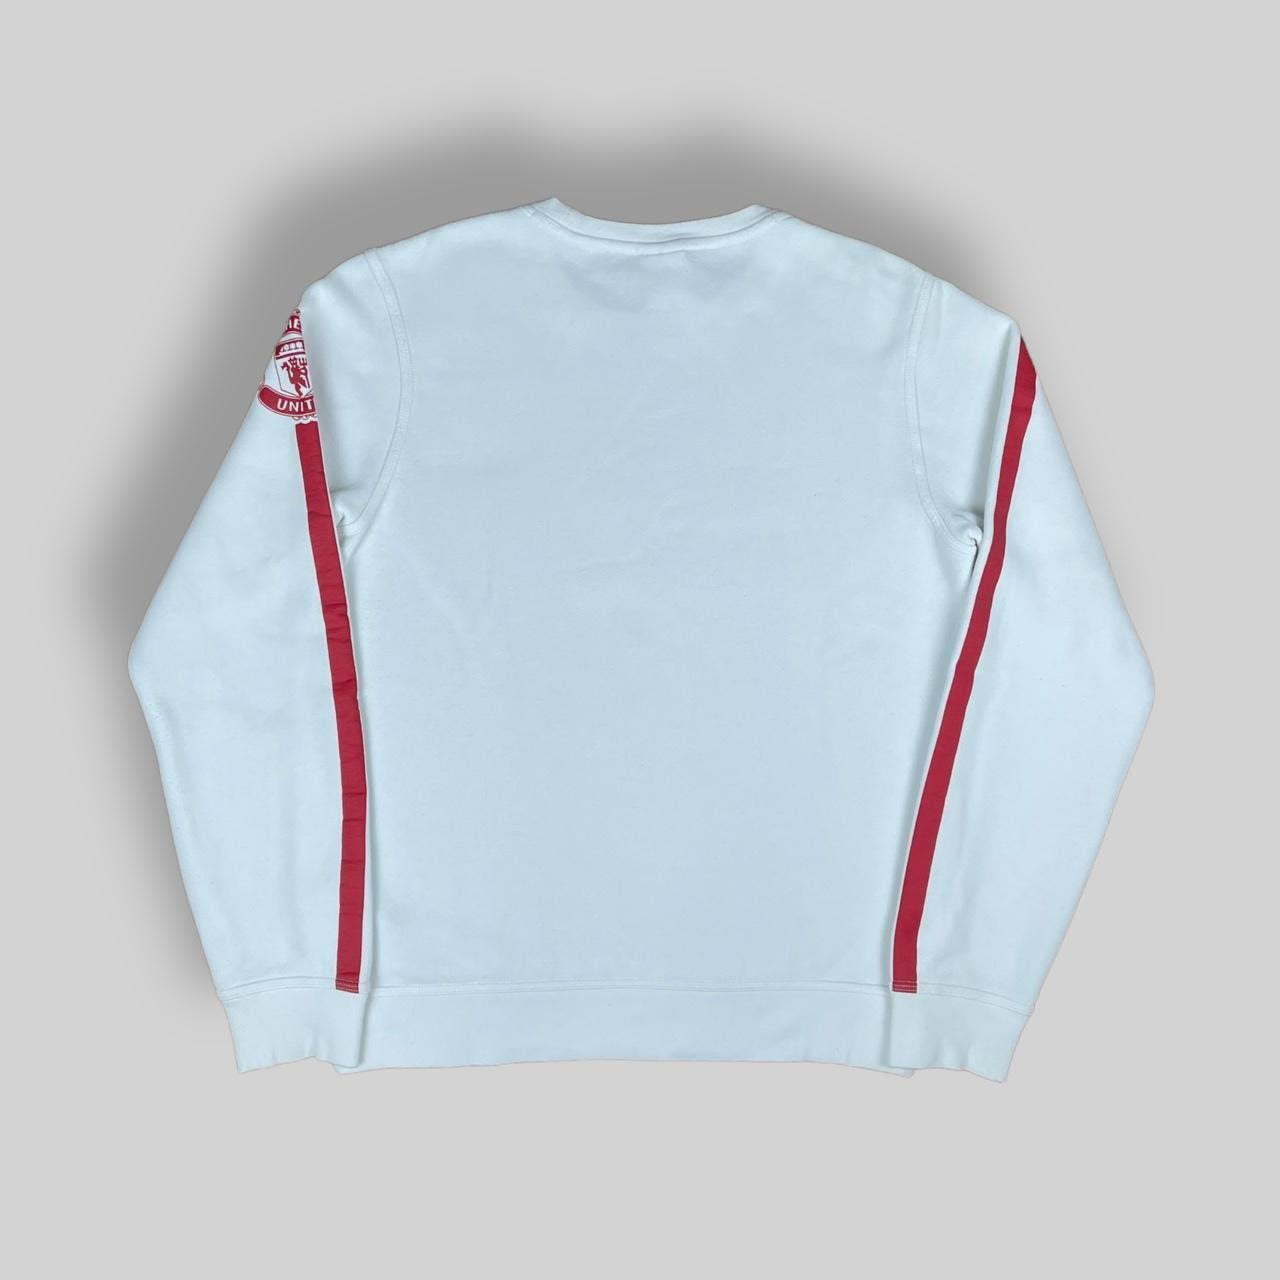 Nike Manchester United Sweatshirt (Small)